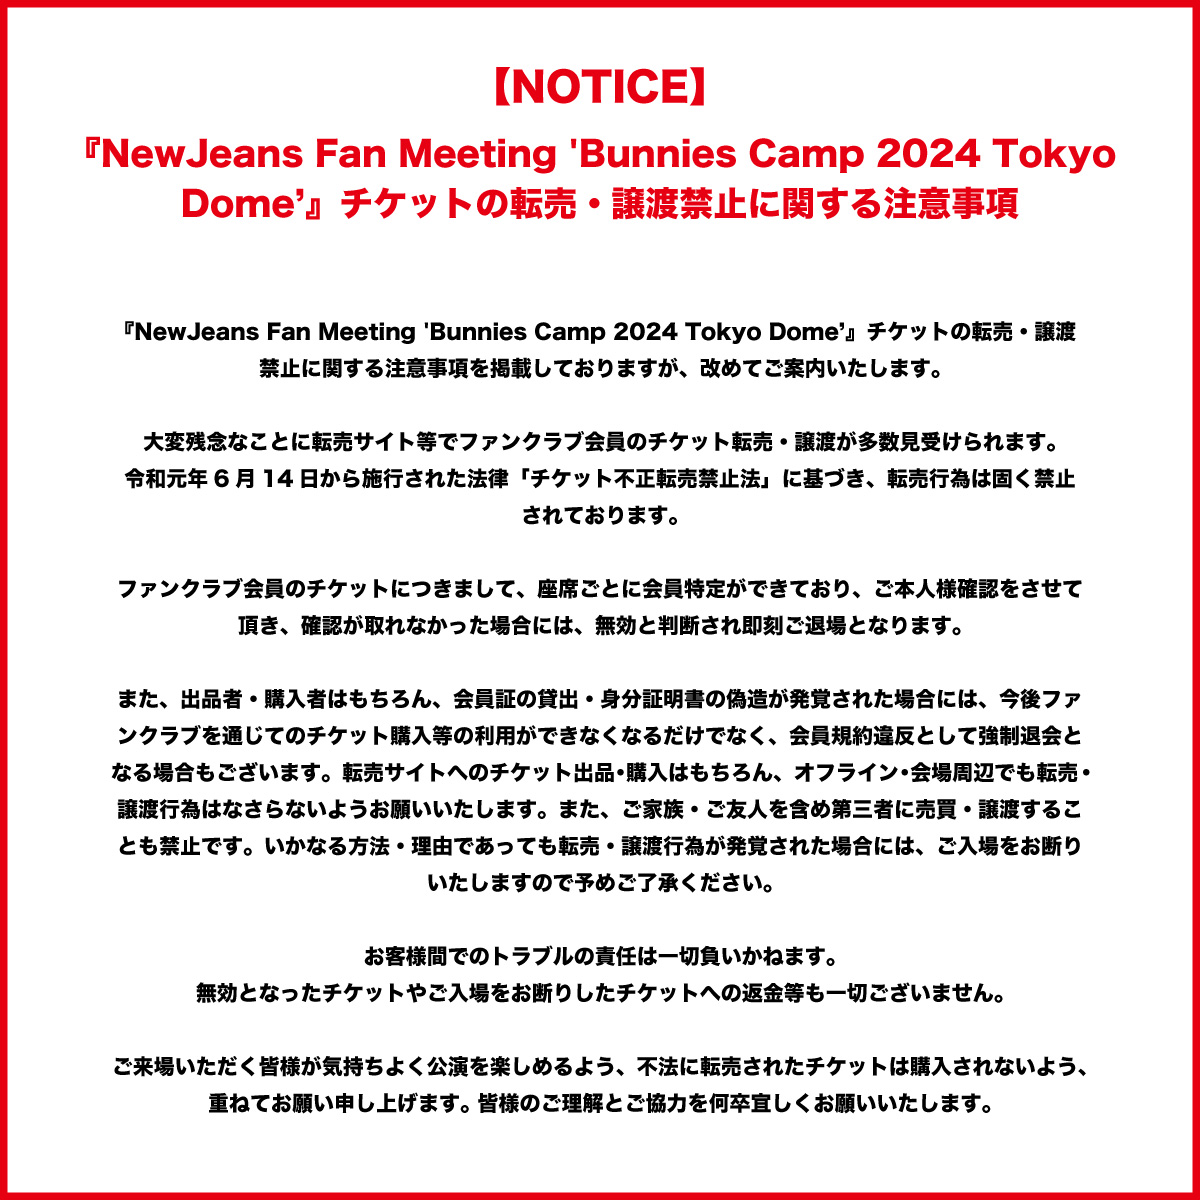 【NewJeans Fan Meeting 'Bunnies Camp 2024 Tokyo Dome'】 チケットの転売・譲渡禁止に関する注意事項を掲載しておりますが、改めてご案内いたします。 大変残念なことに転売サイト等でファンクラブ会員のチケット転売・譲渡が多数見受けられます。…